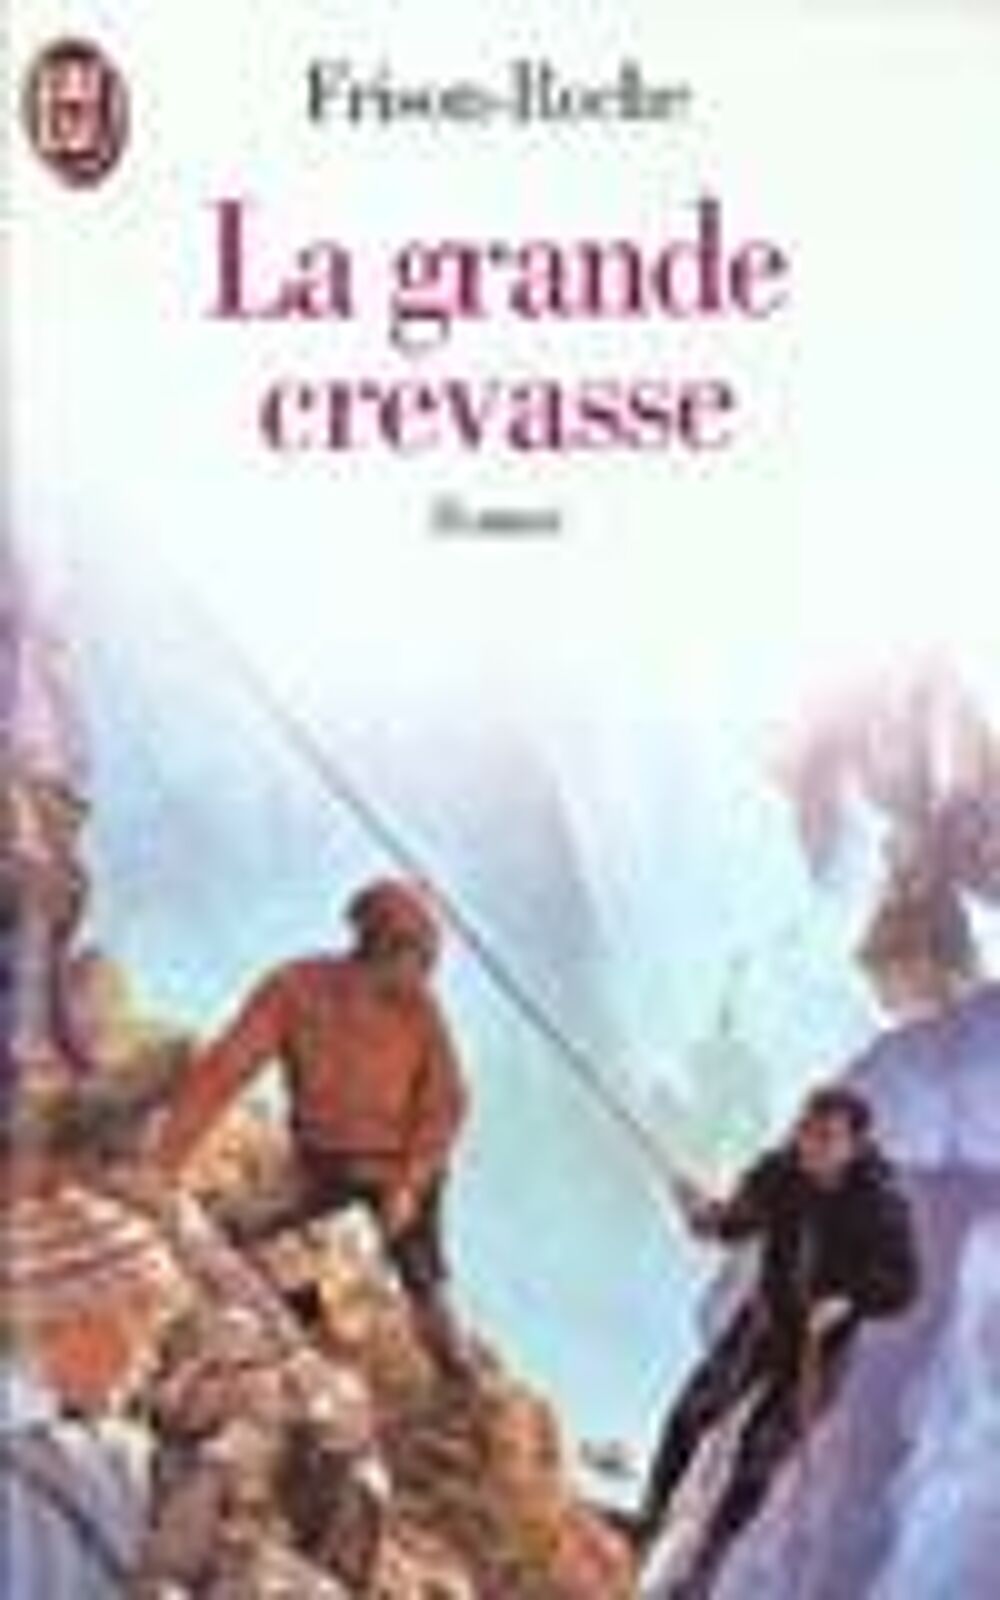 Grande crevasse (la) - - roman Livres et BD